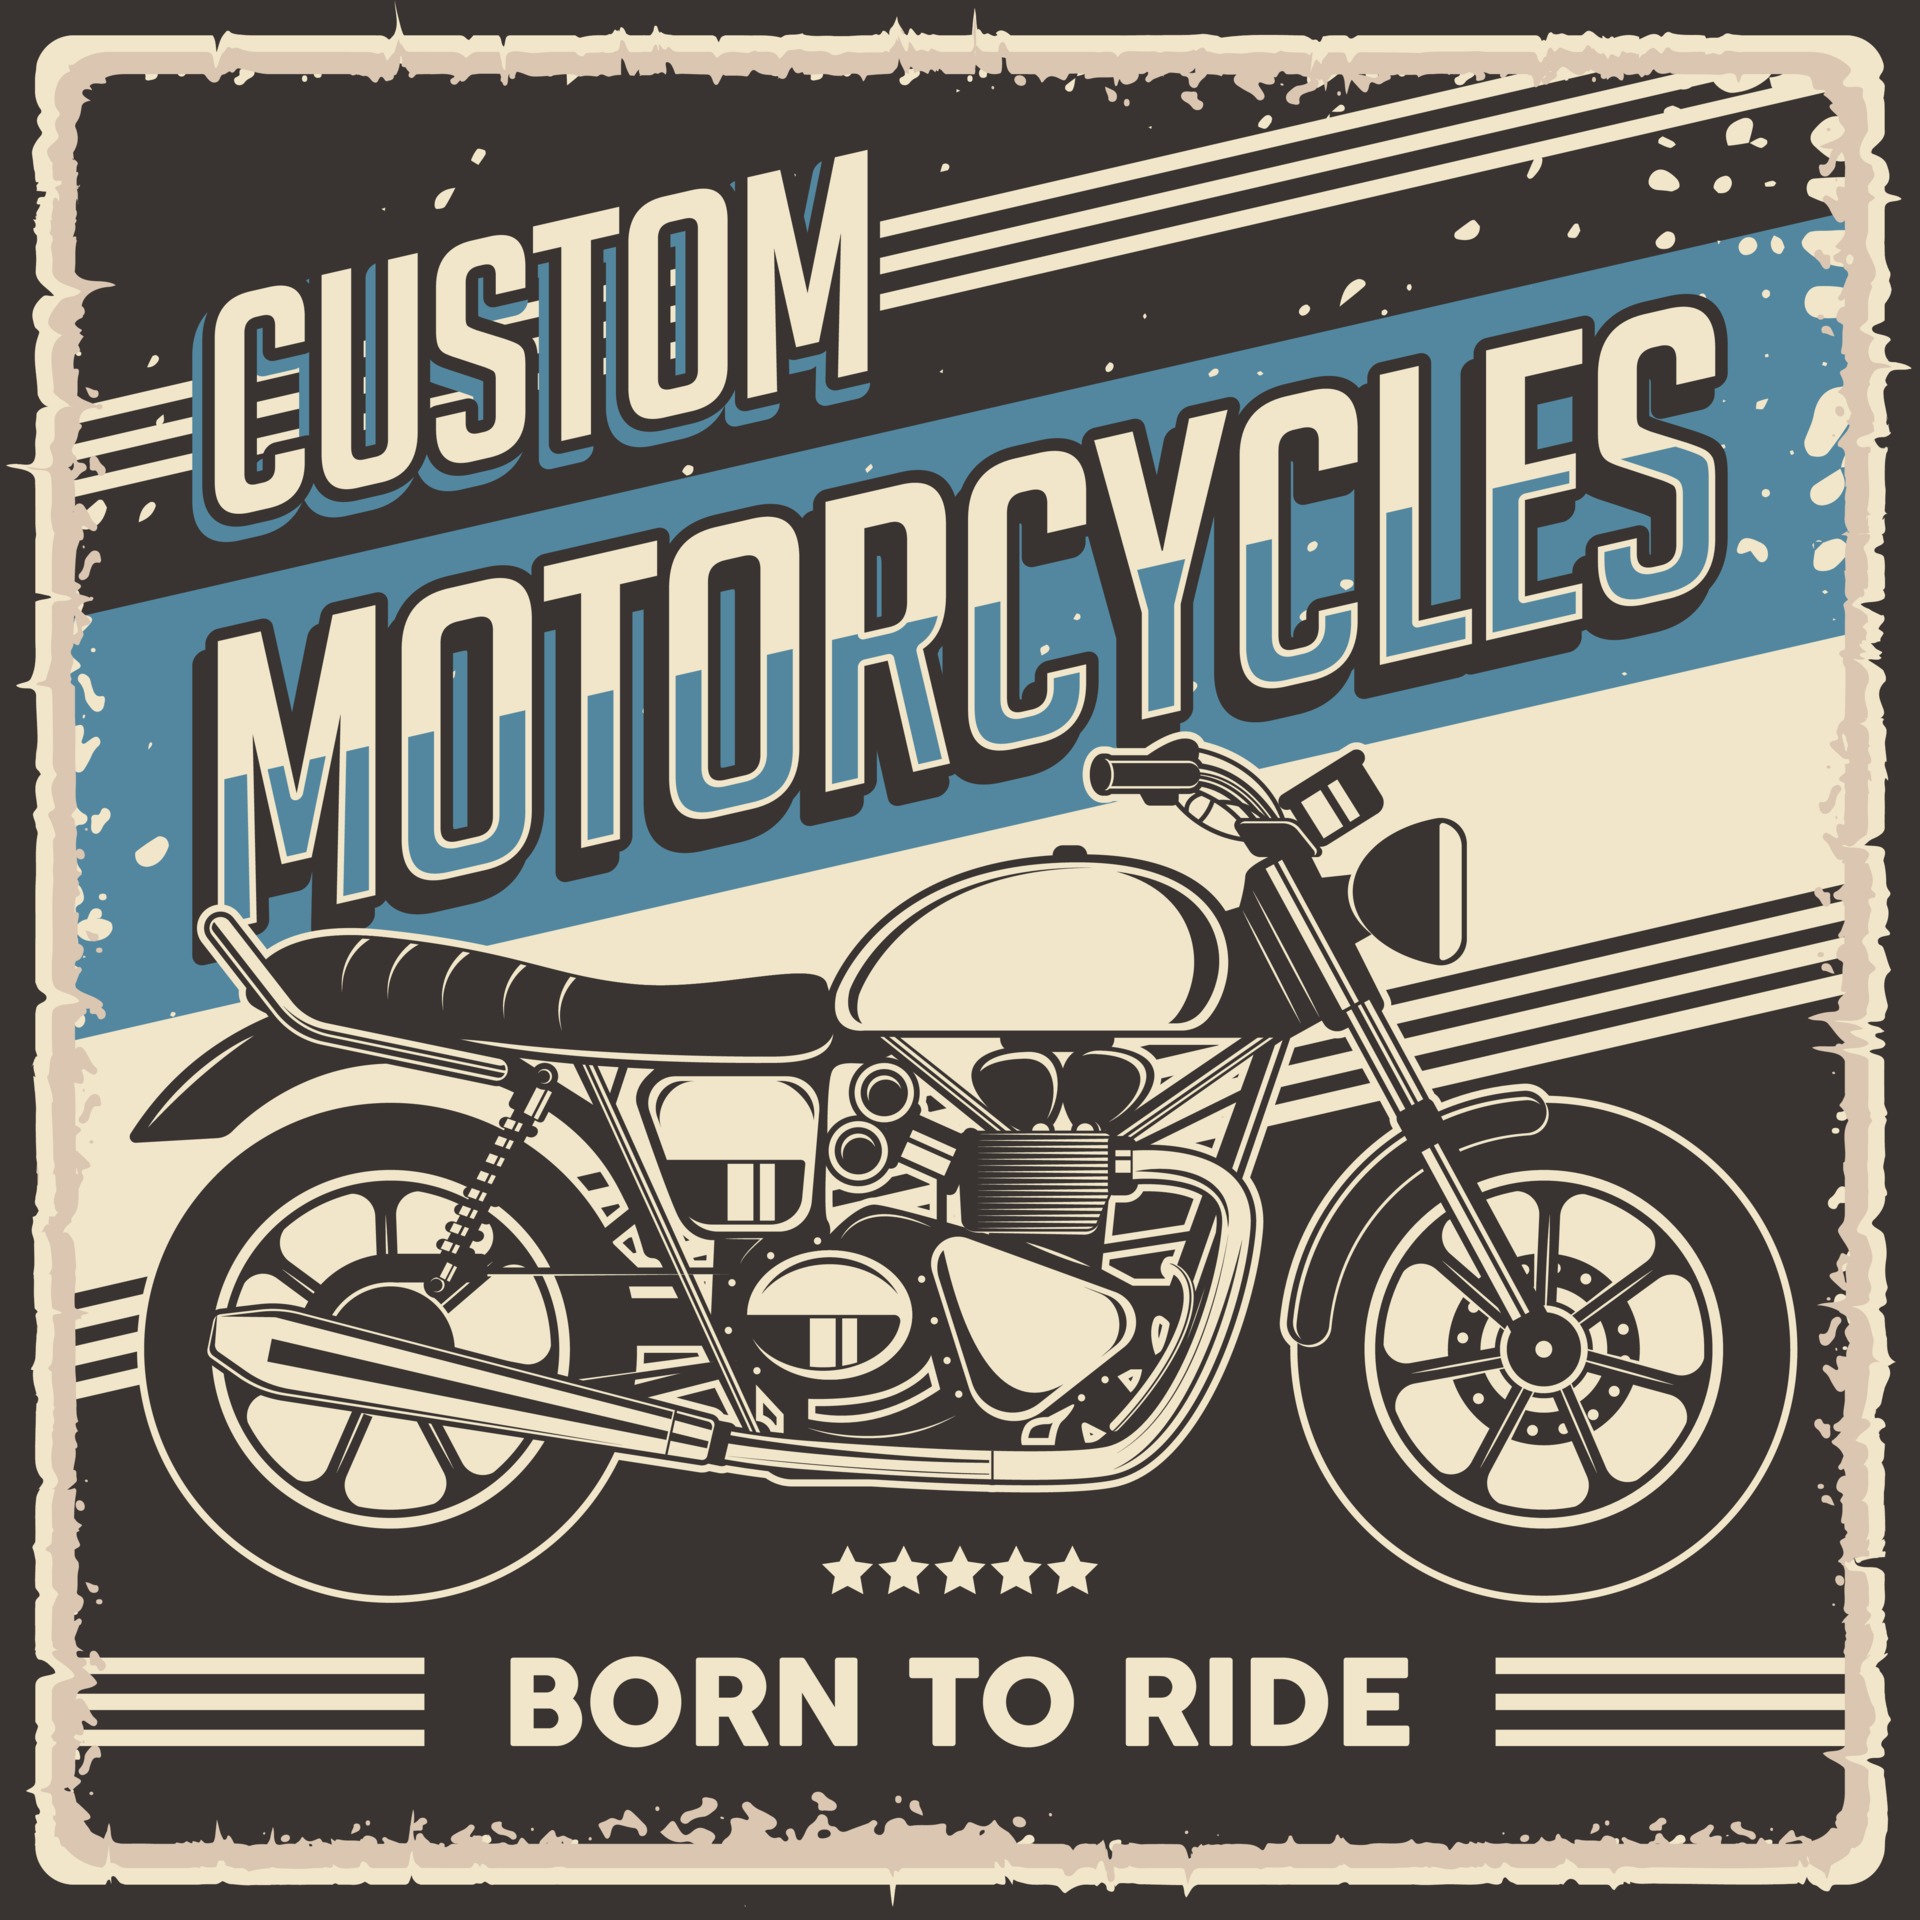 Design: Vintage Motorcycle Posters